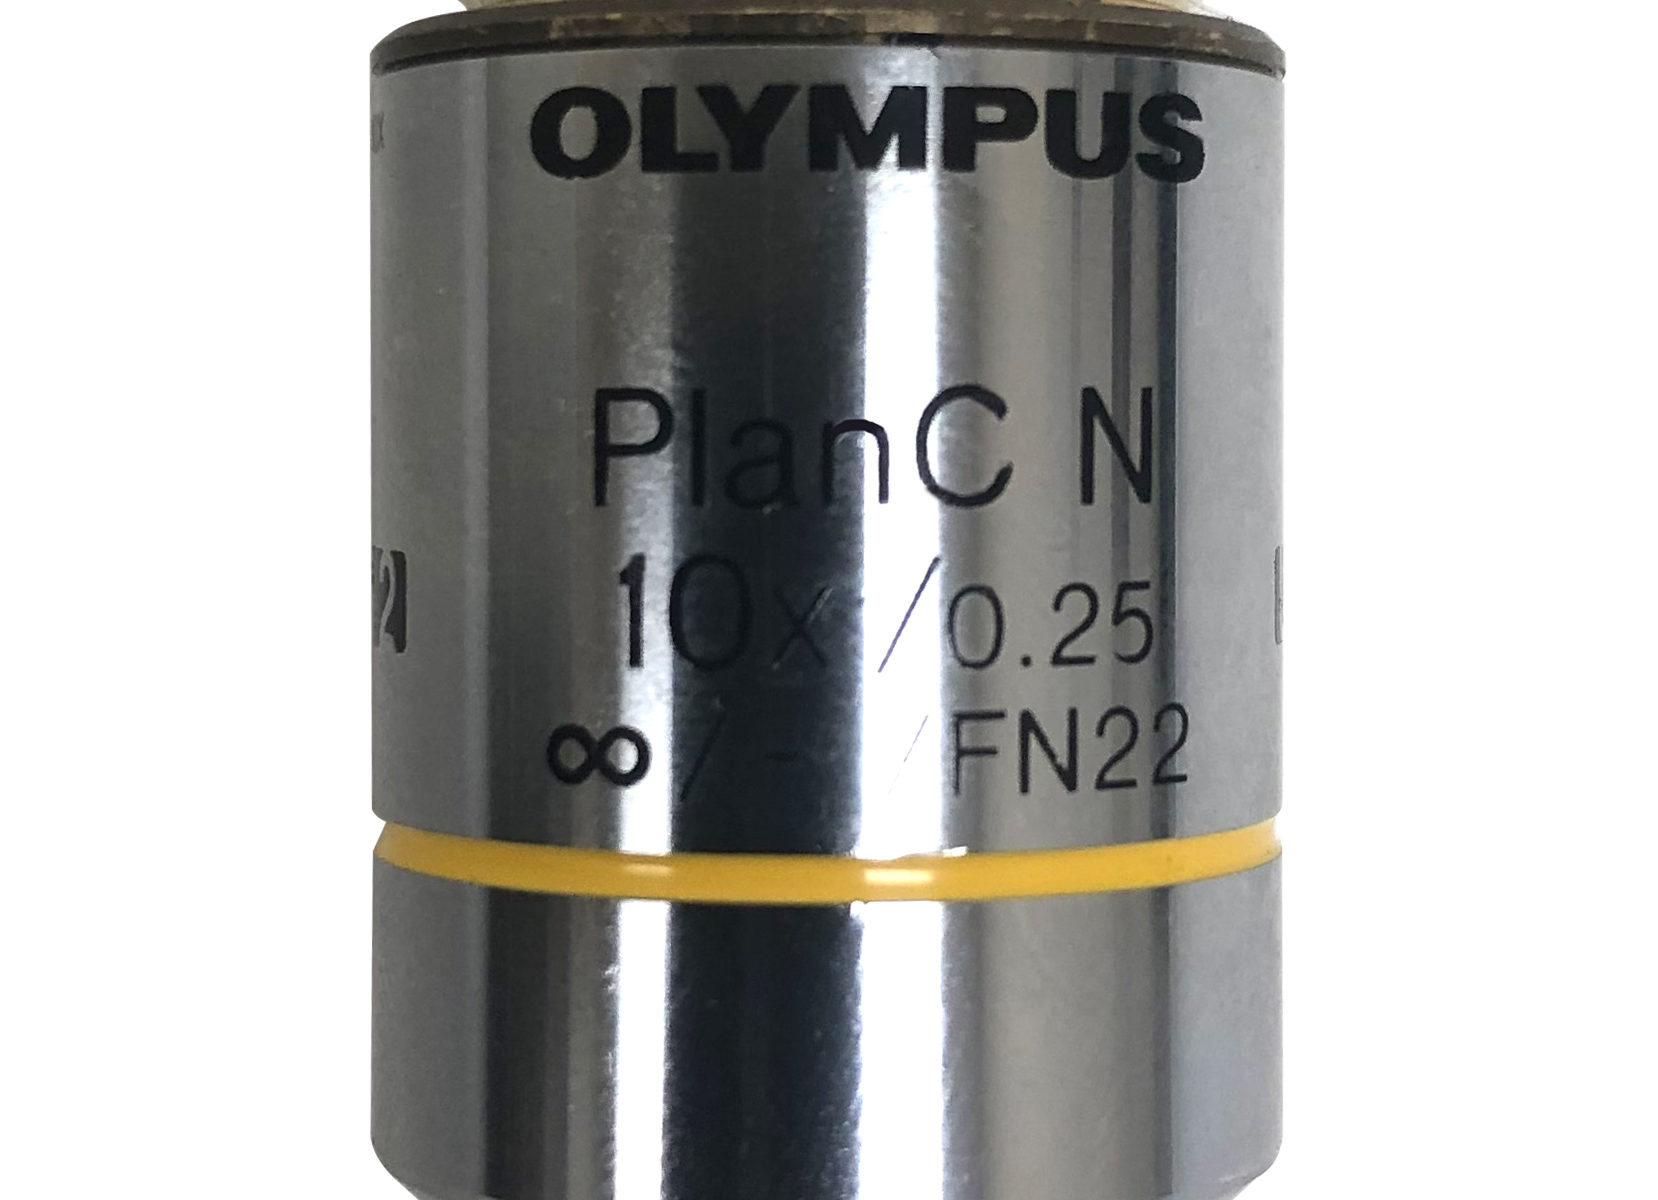 Olympus 10X/0.25 Infinity PlanC N Microscope Objective Hero